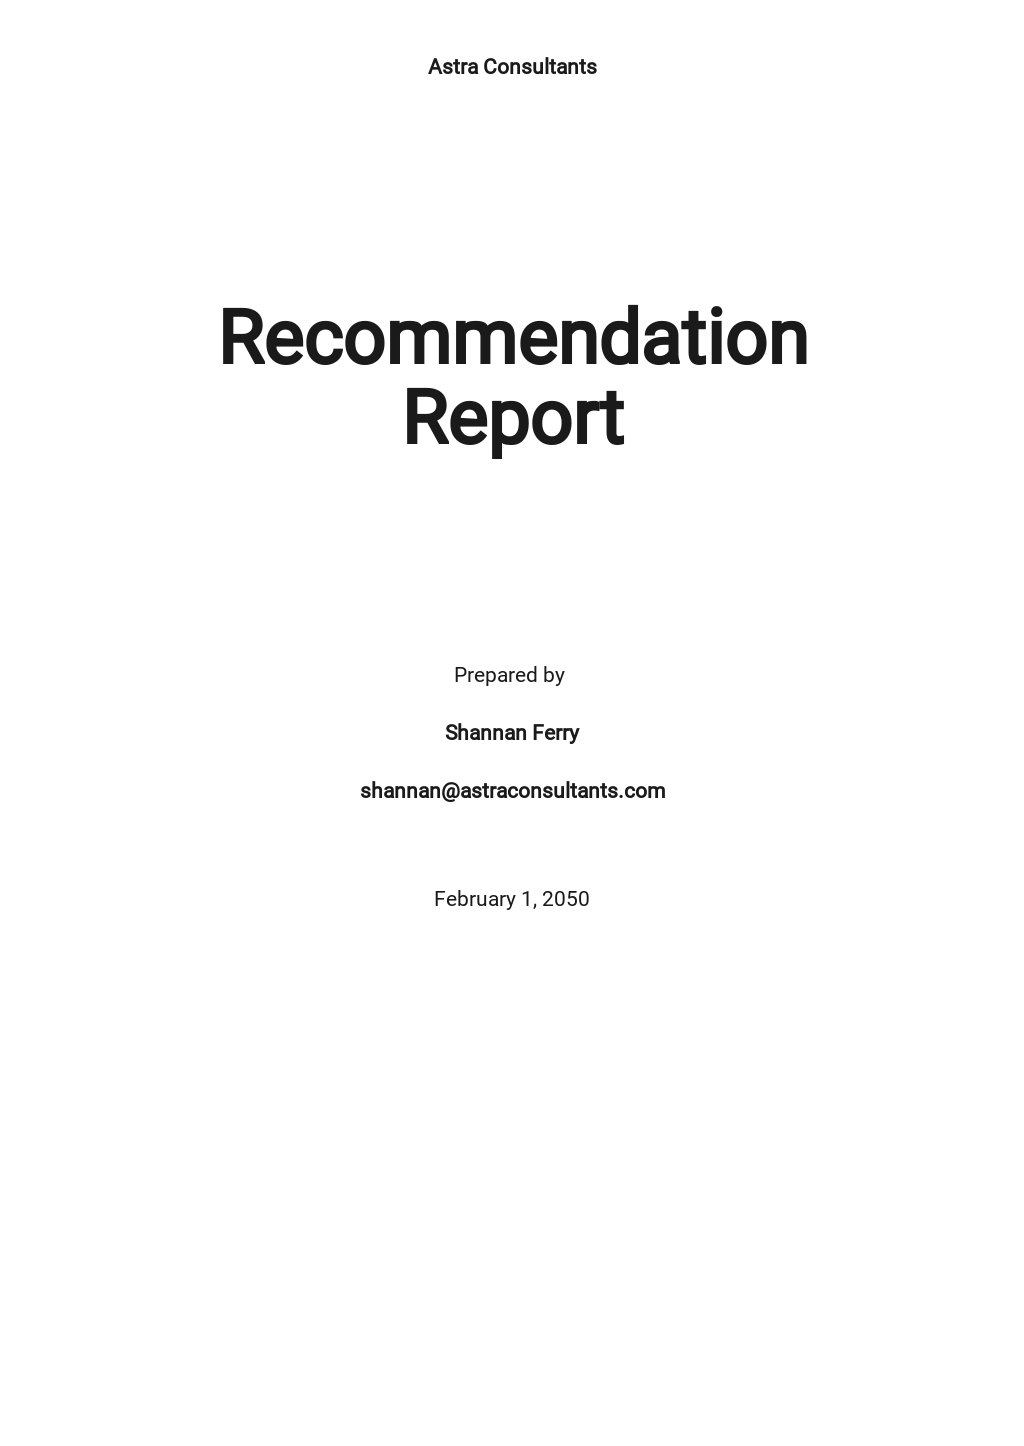 Recommendation Report Template - Google Docs, Word  Template.net Within Recommendation Report Template